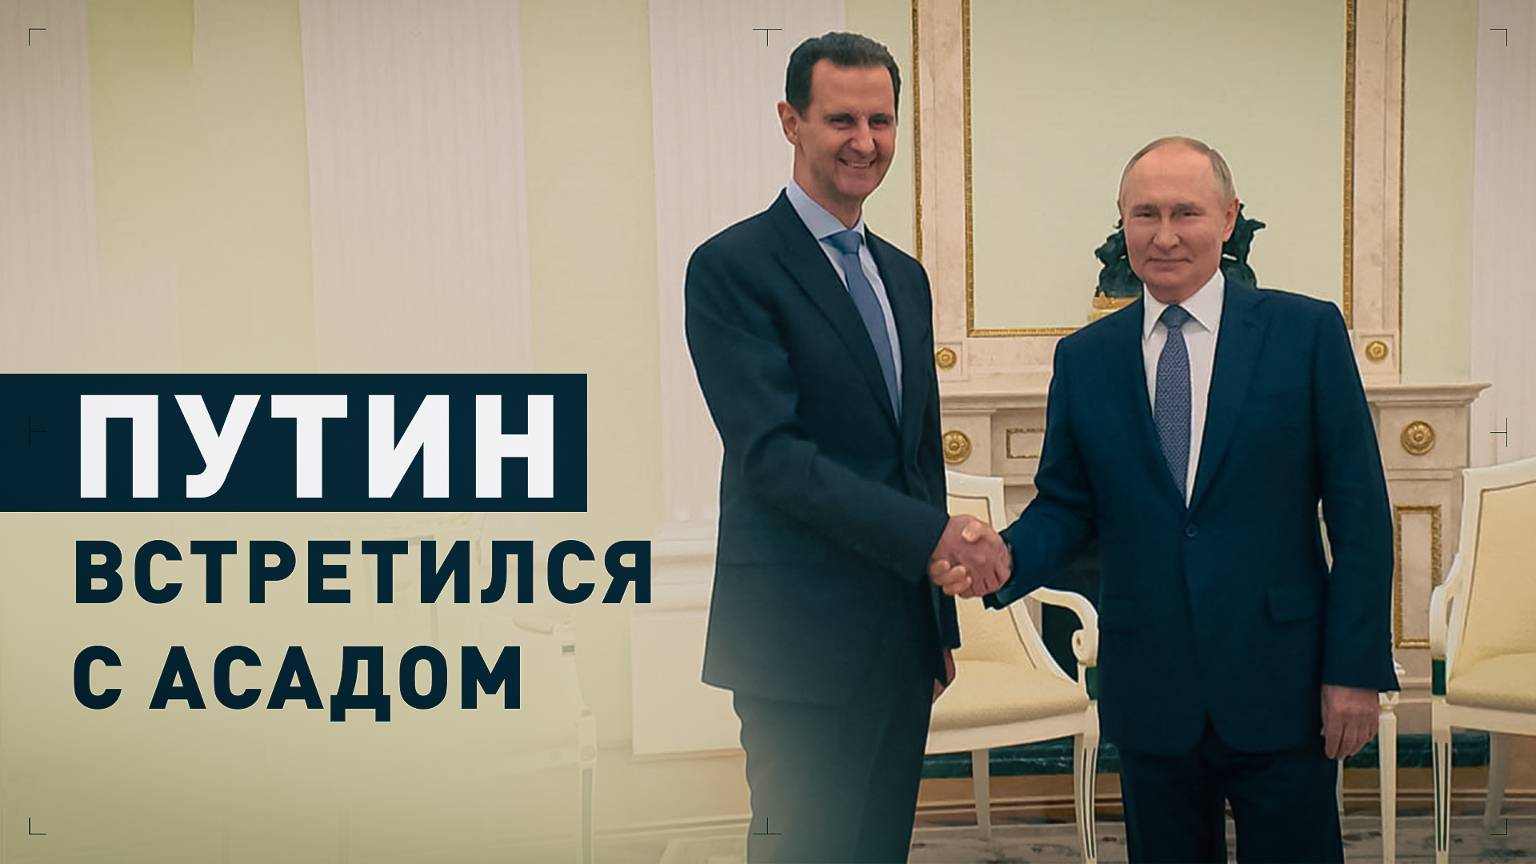 Встреча Владимира Путина и Башара Асада в Кремле — видео